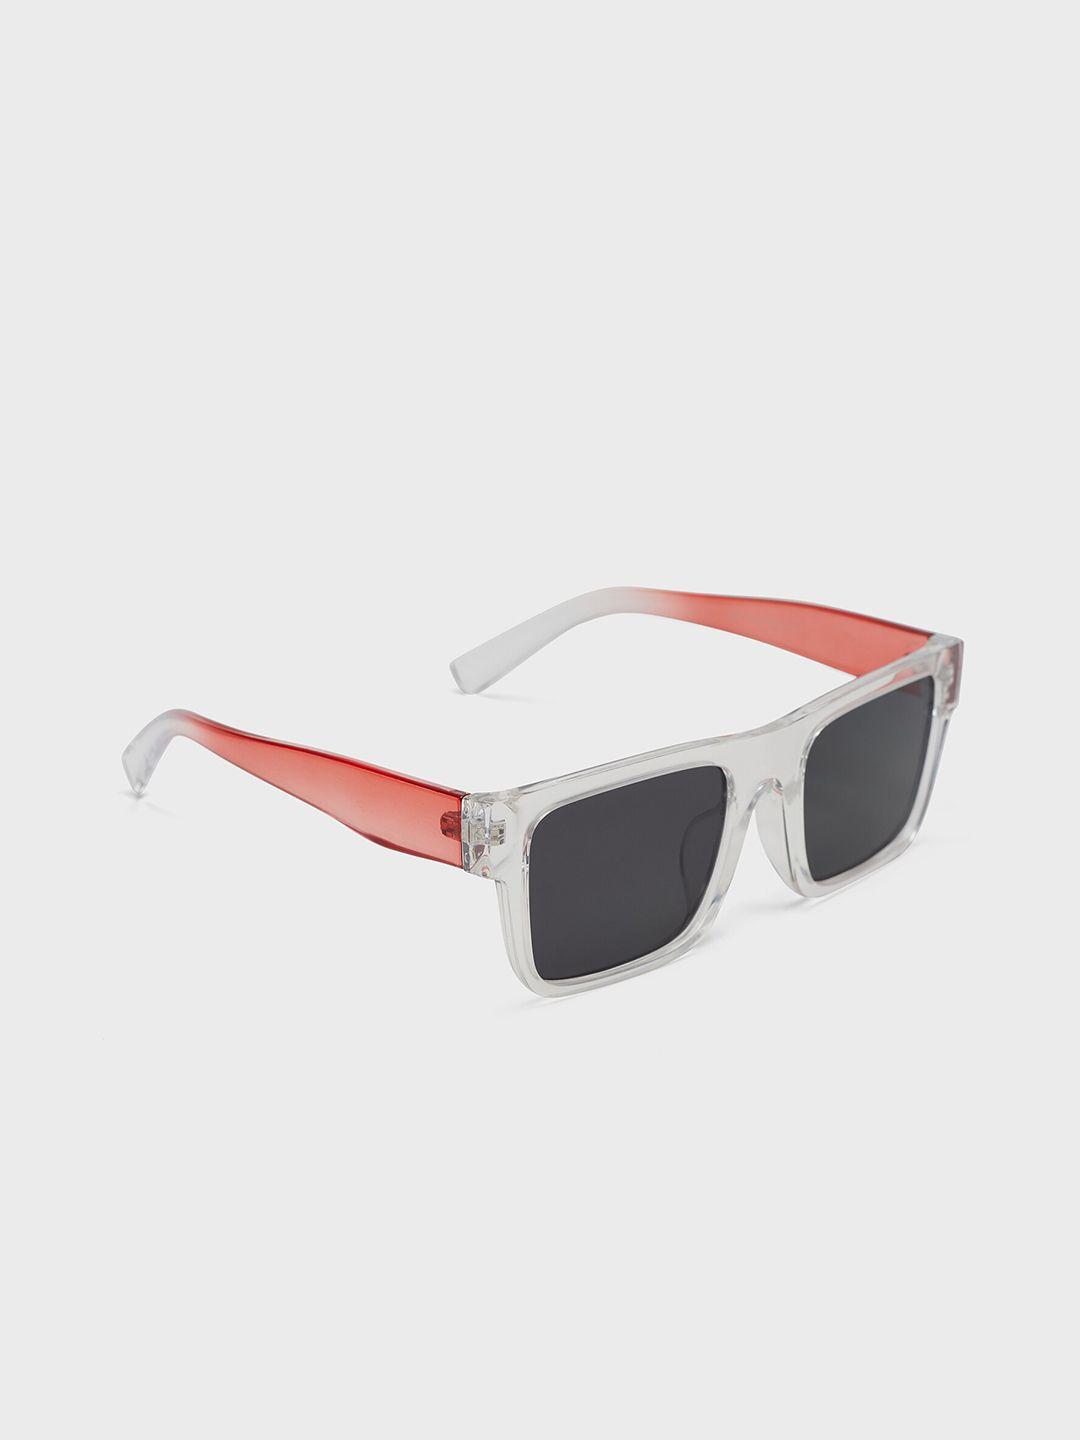 20dresses women square acrylic sunglasses with regular lens sg010800